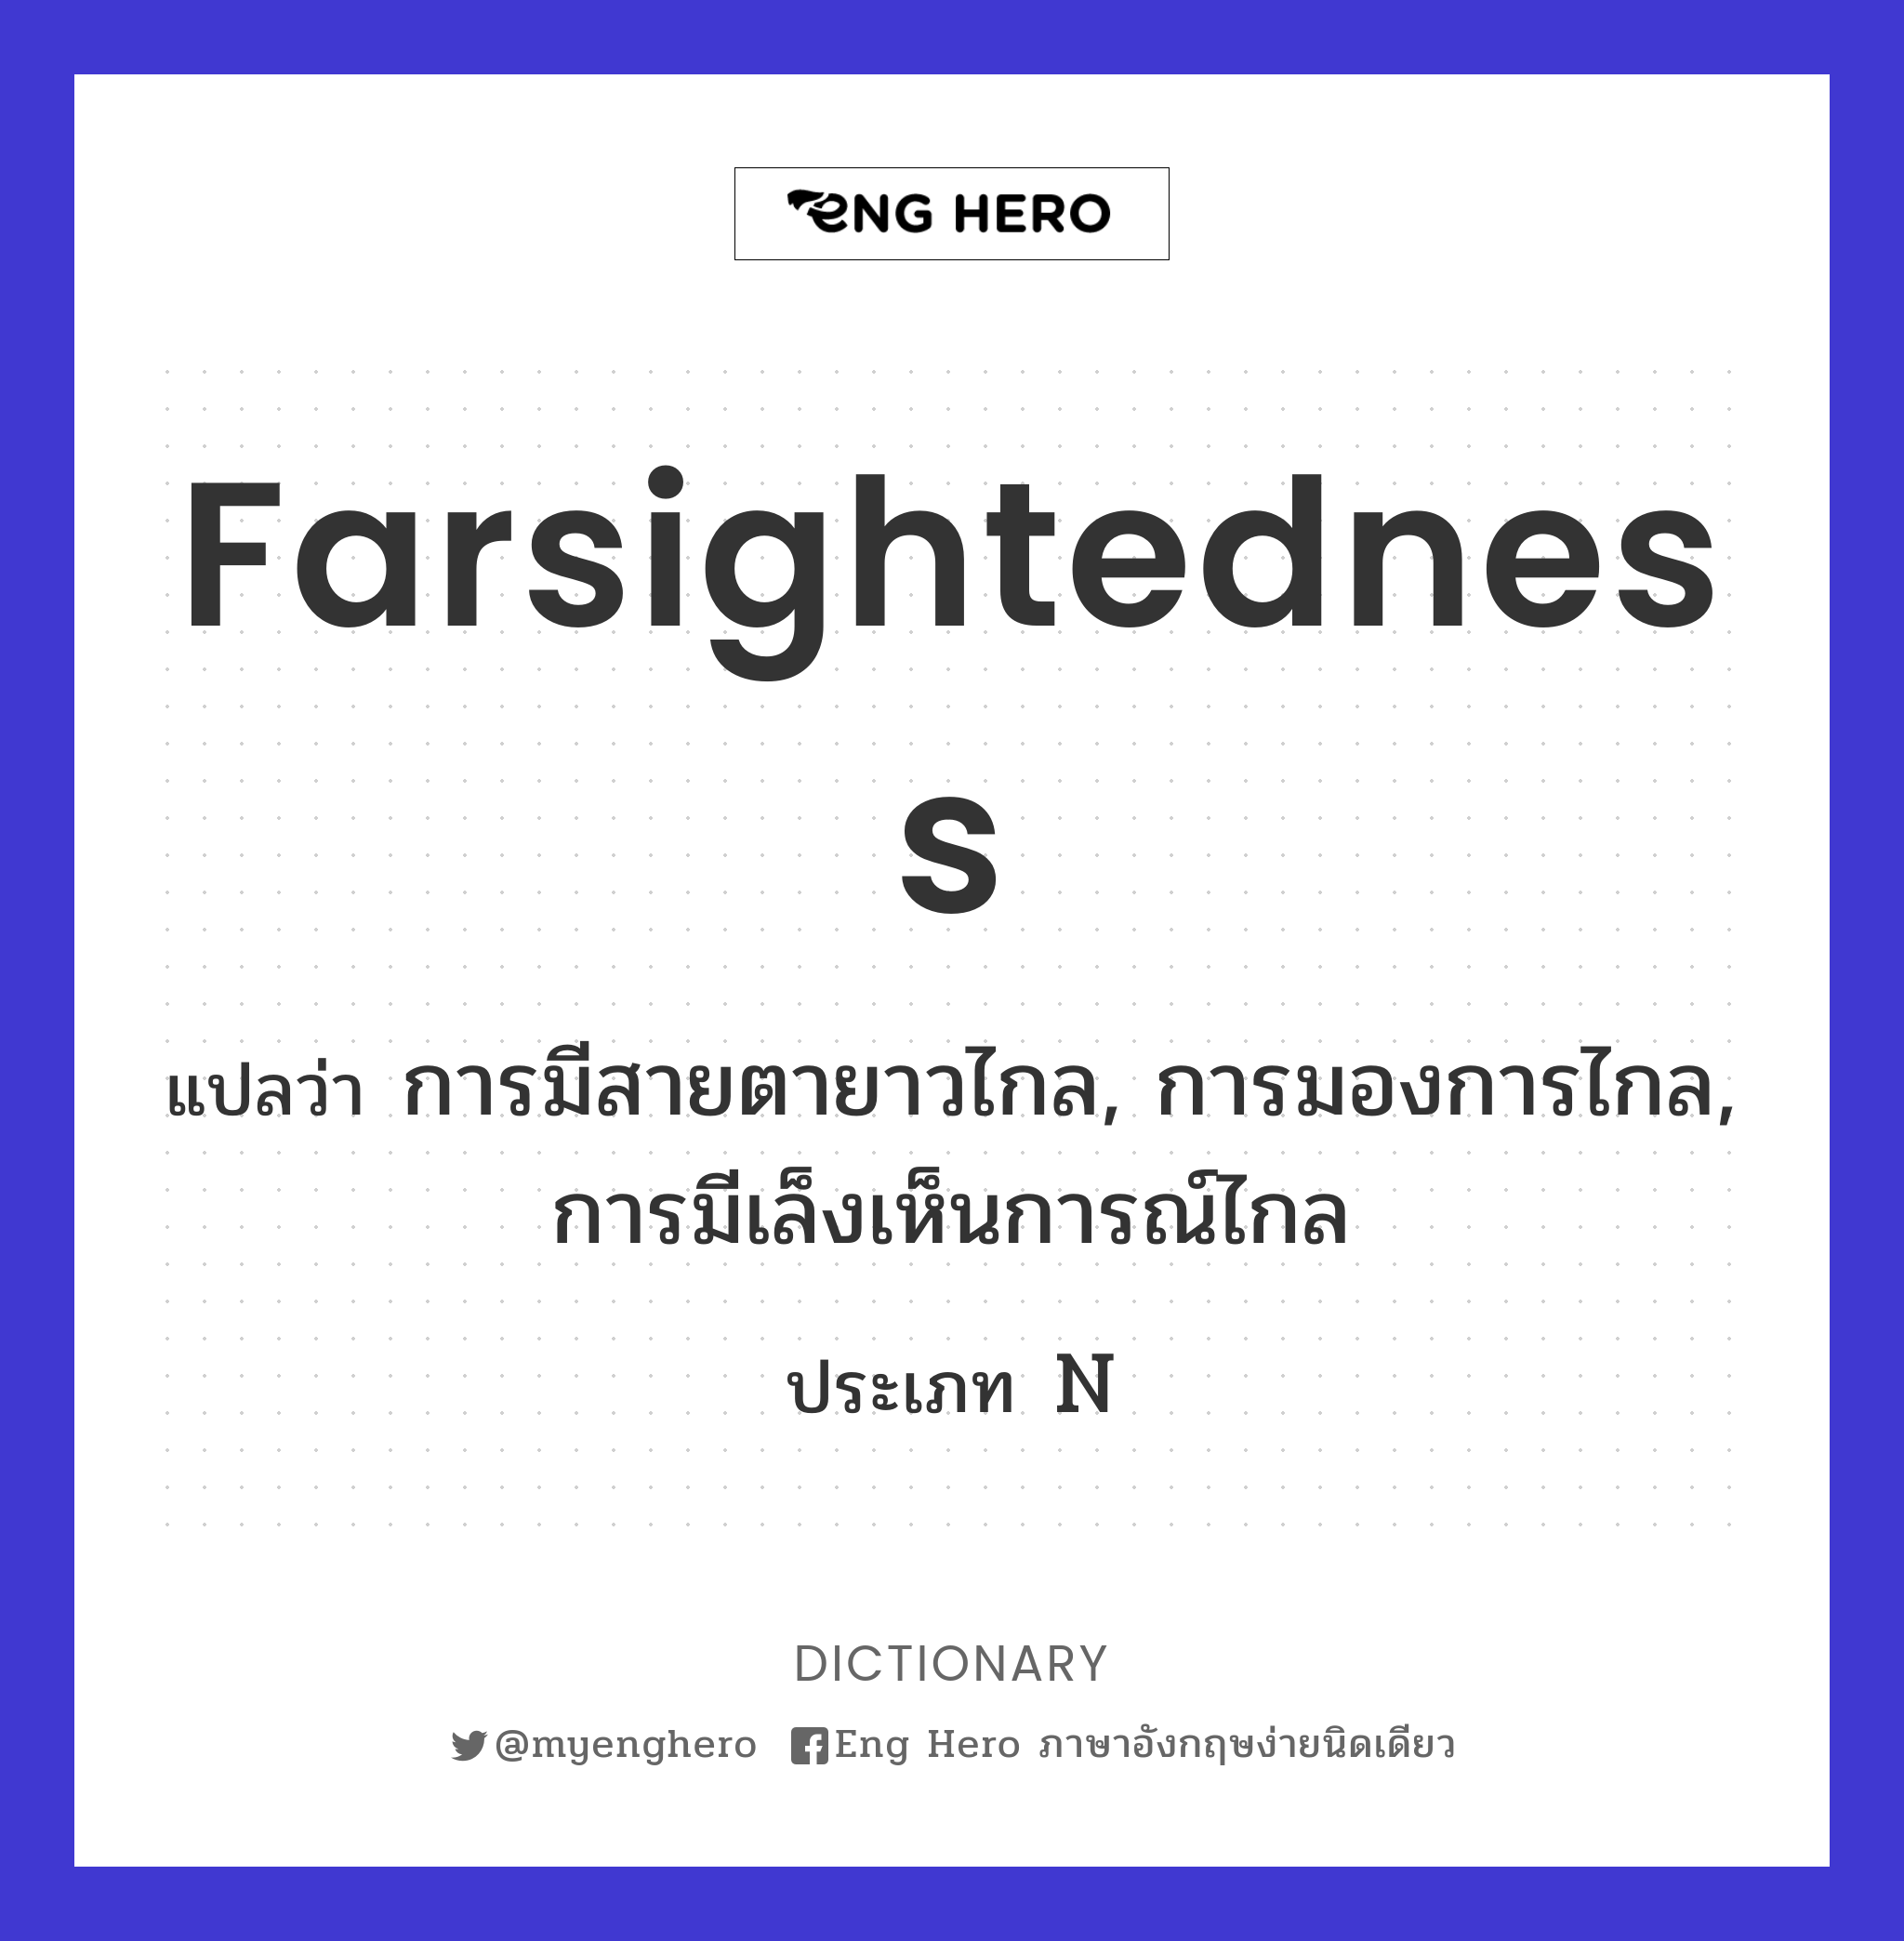 farsightedness